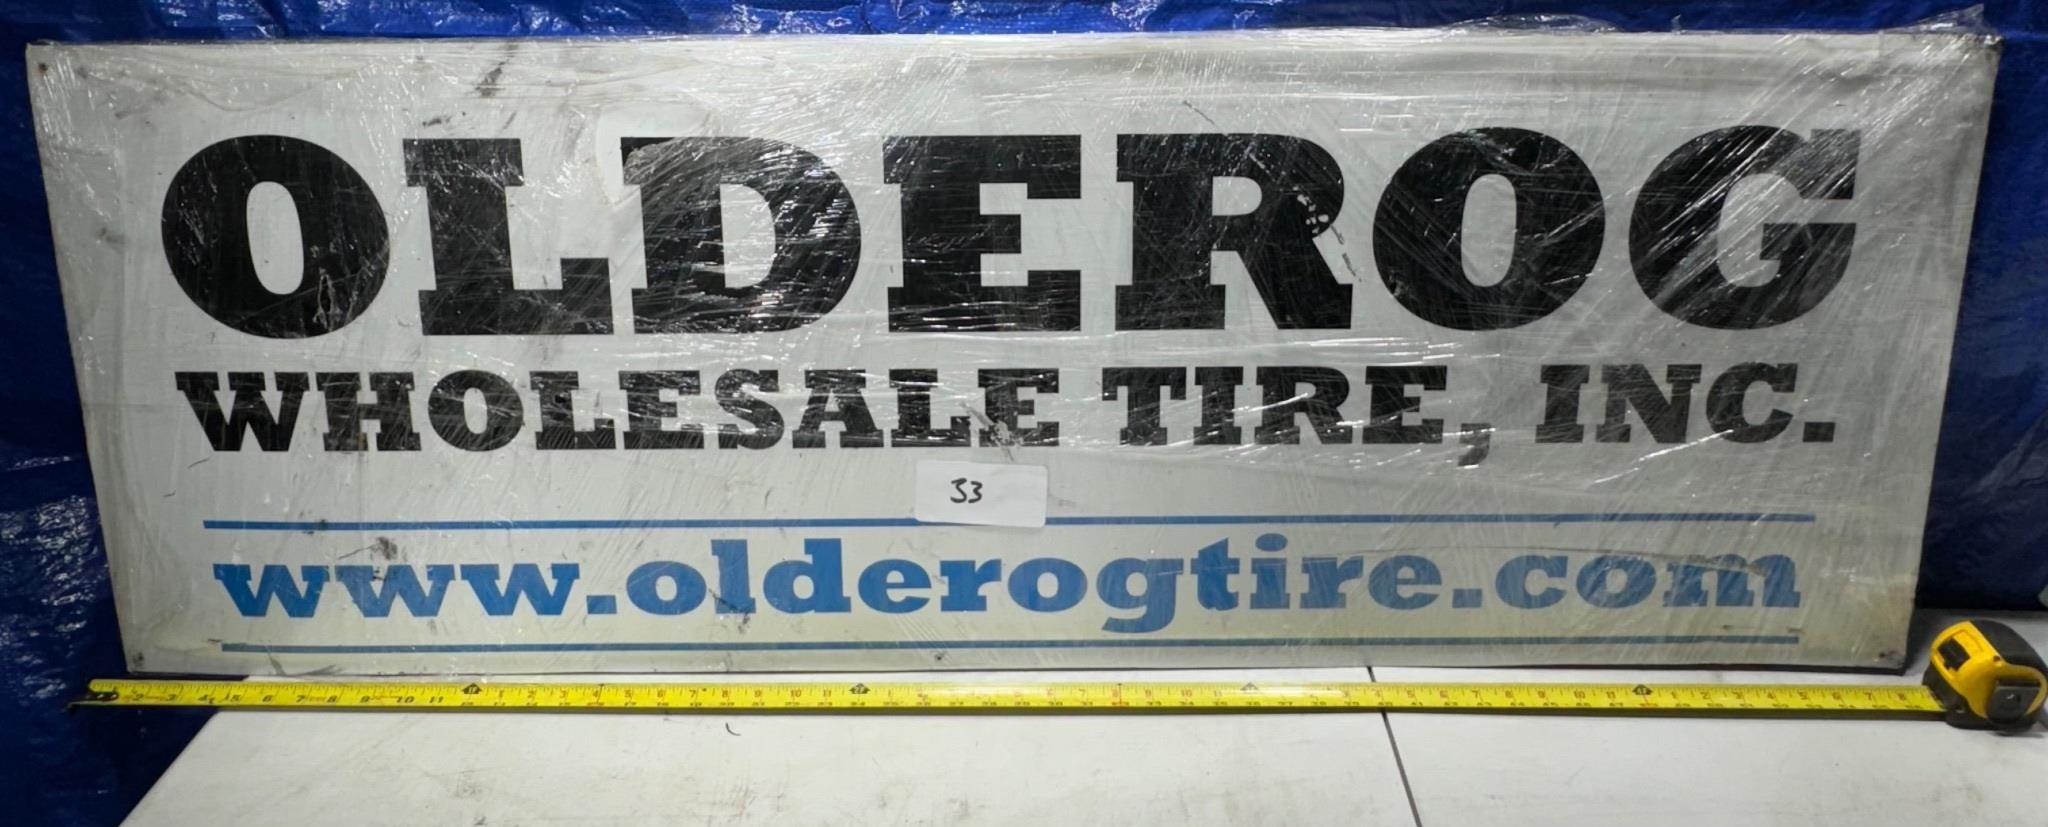 Wholesale tire sign